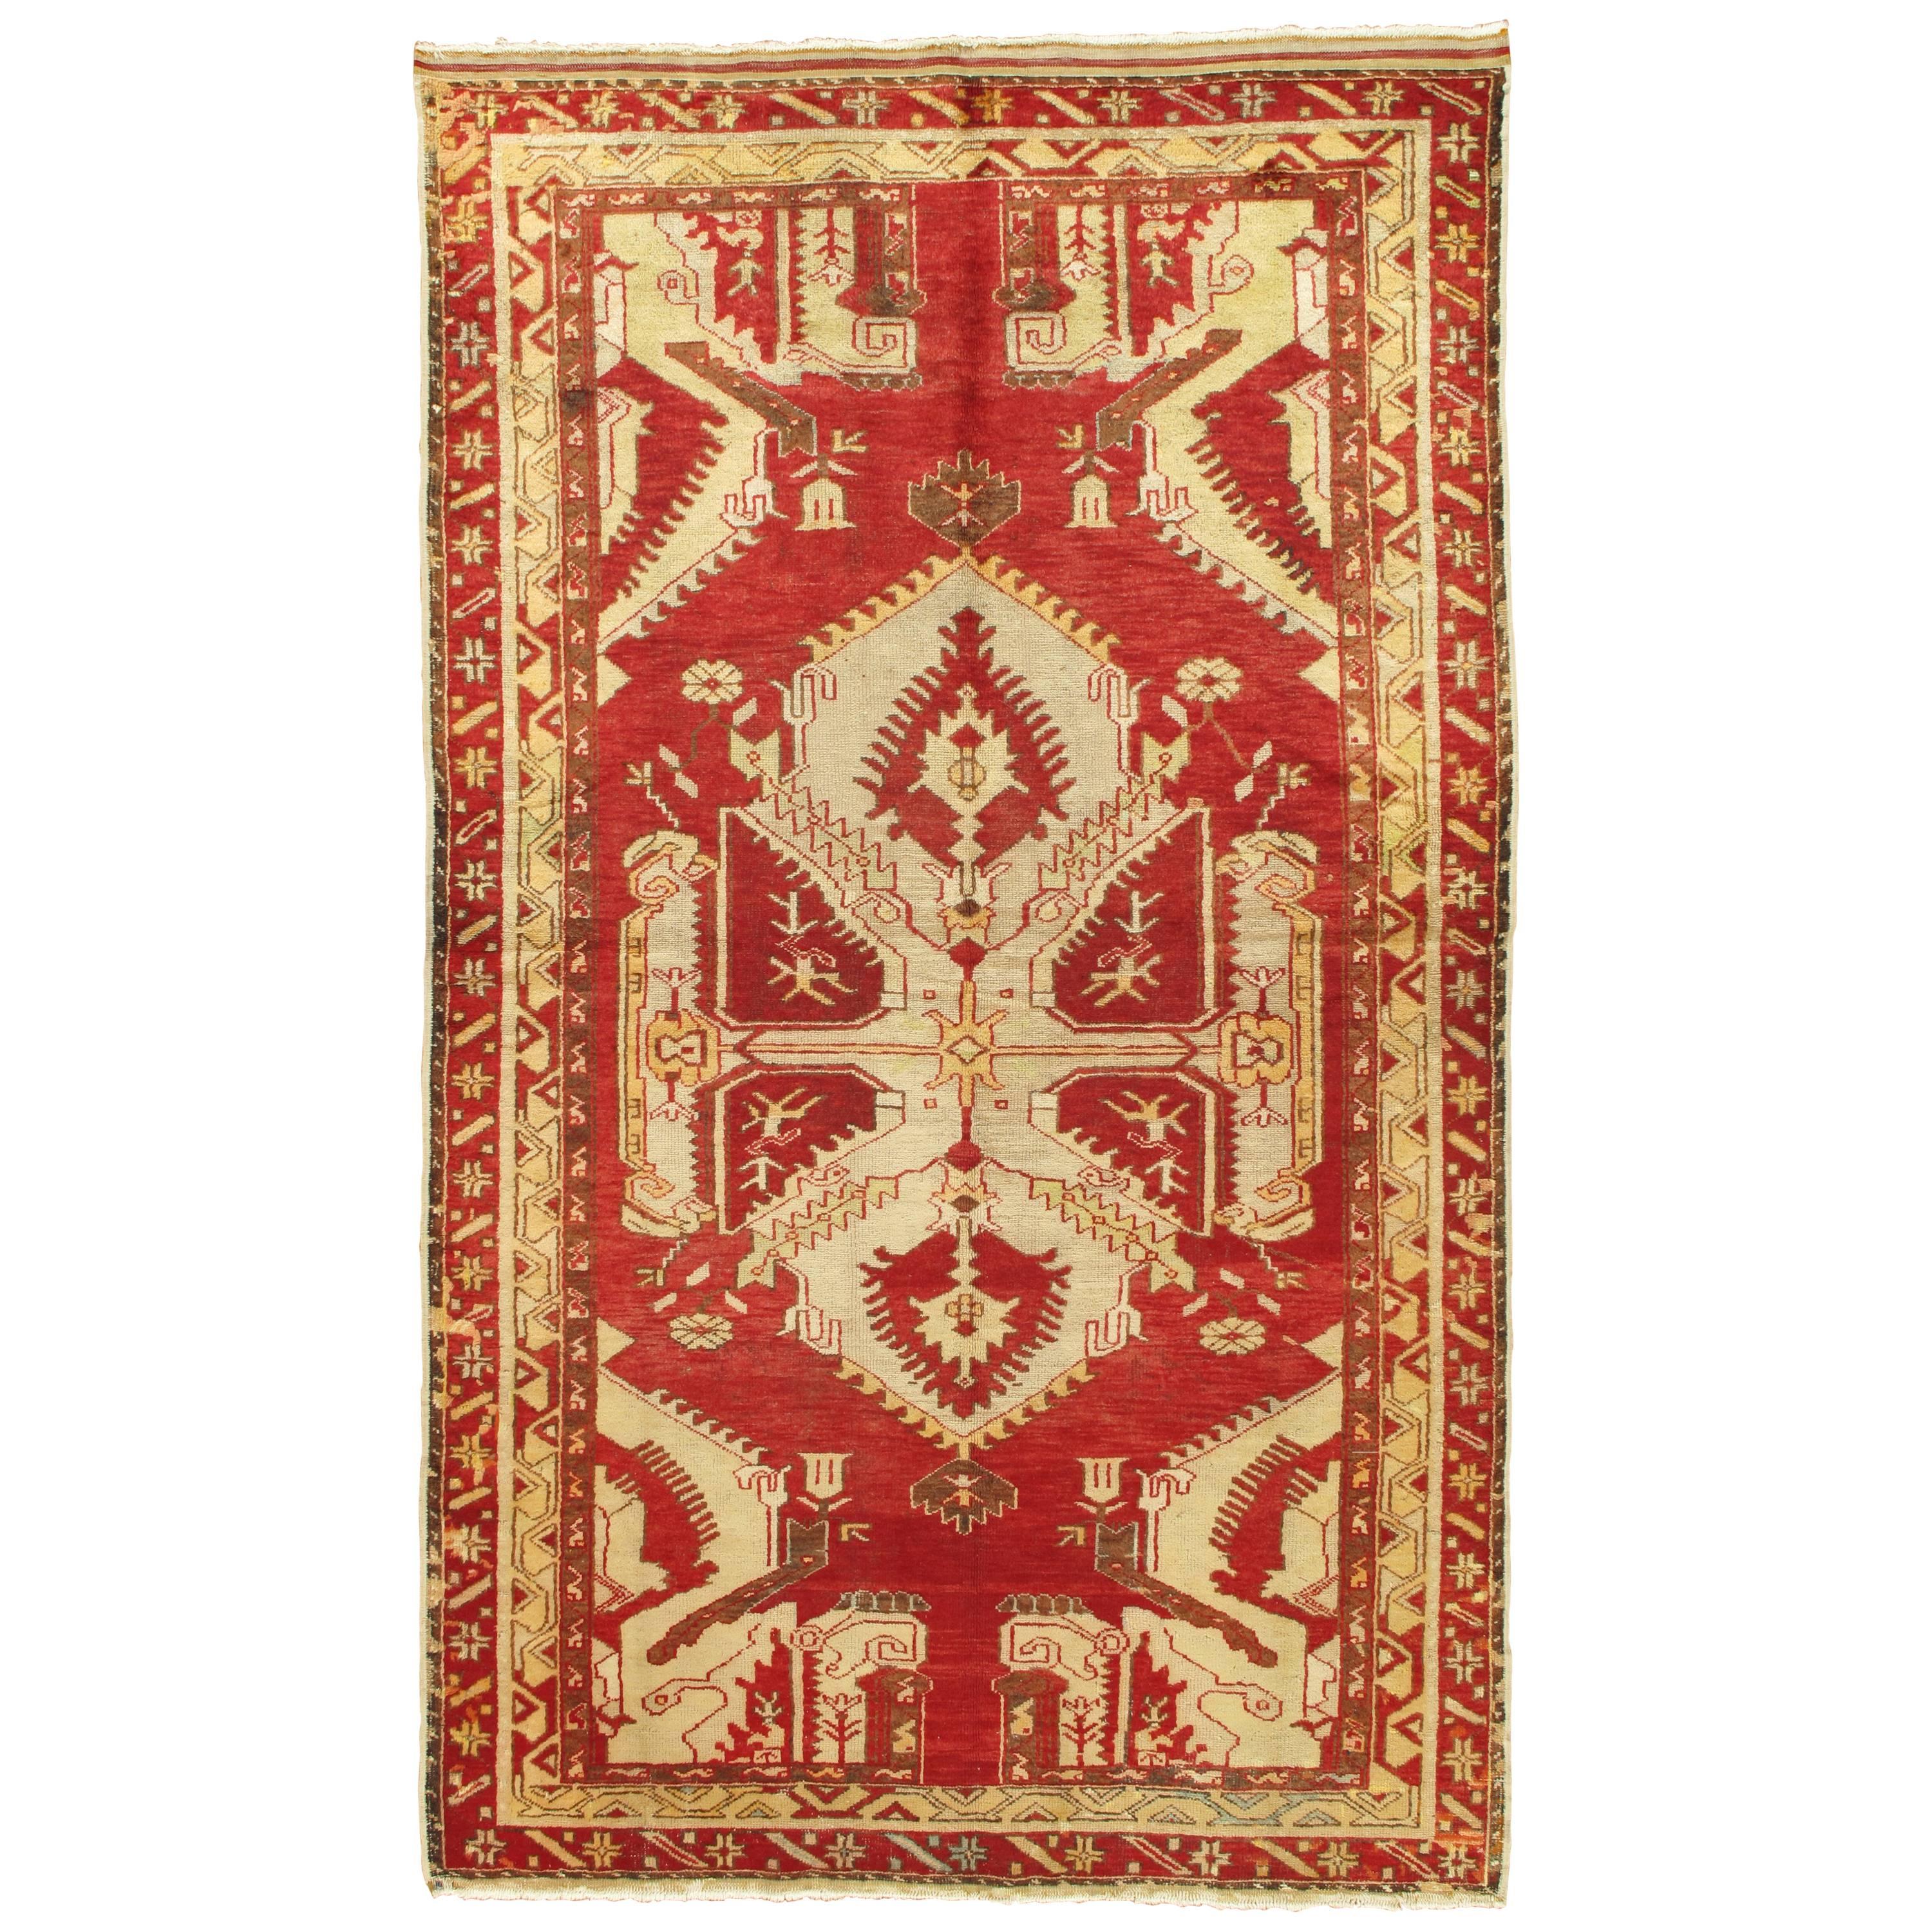 Antique Oushak Rug, Turkish Handmade Oriental Rug, Red, Beige, Bold Design 5x8 For Sale